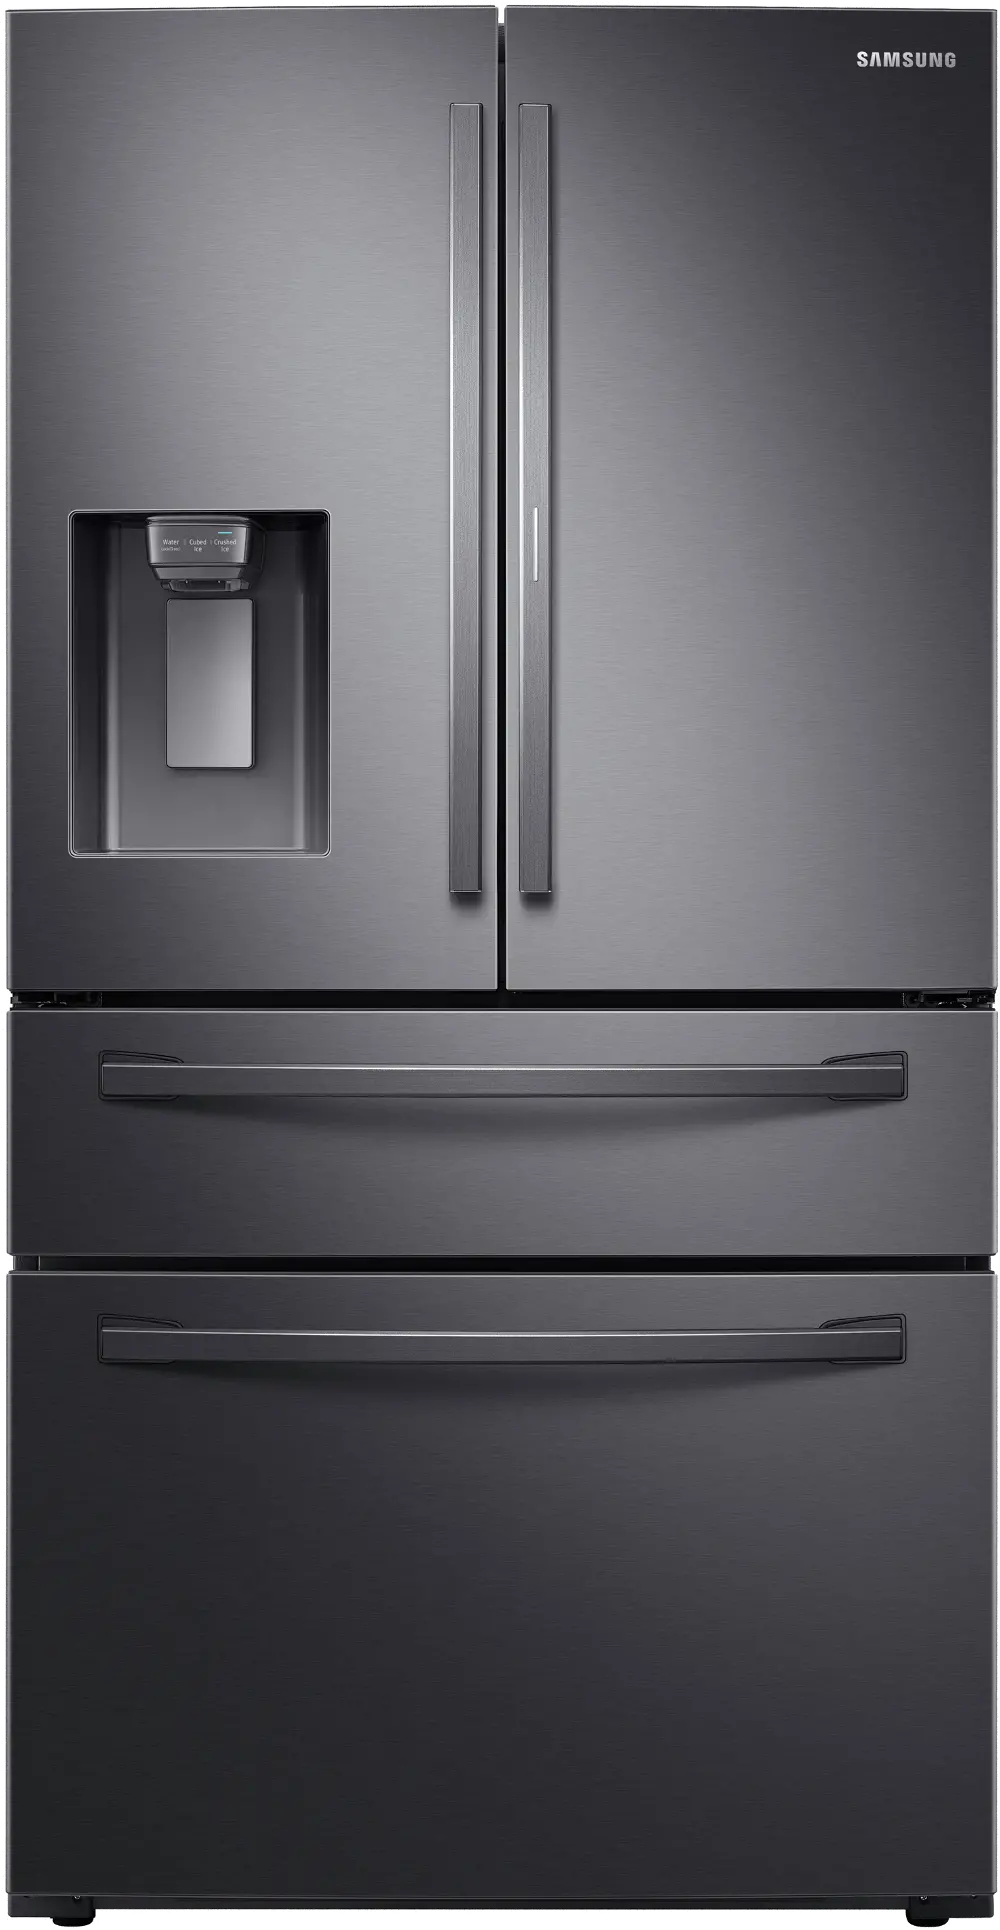 RF22R7351SG Samsung 22.4 cu ft 4 Door Refrigerator - Counter Depth Stainless Steel-1